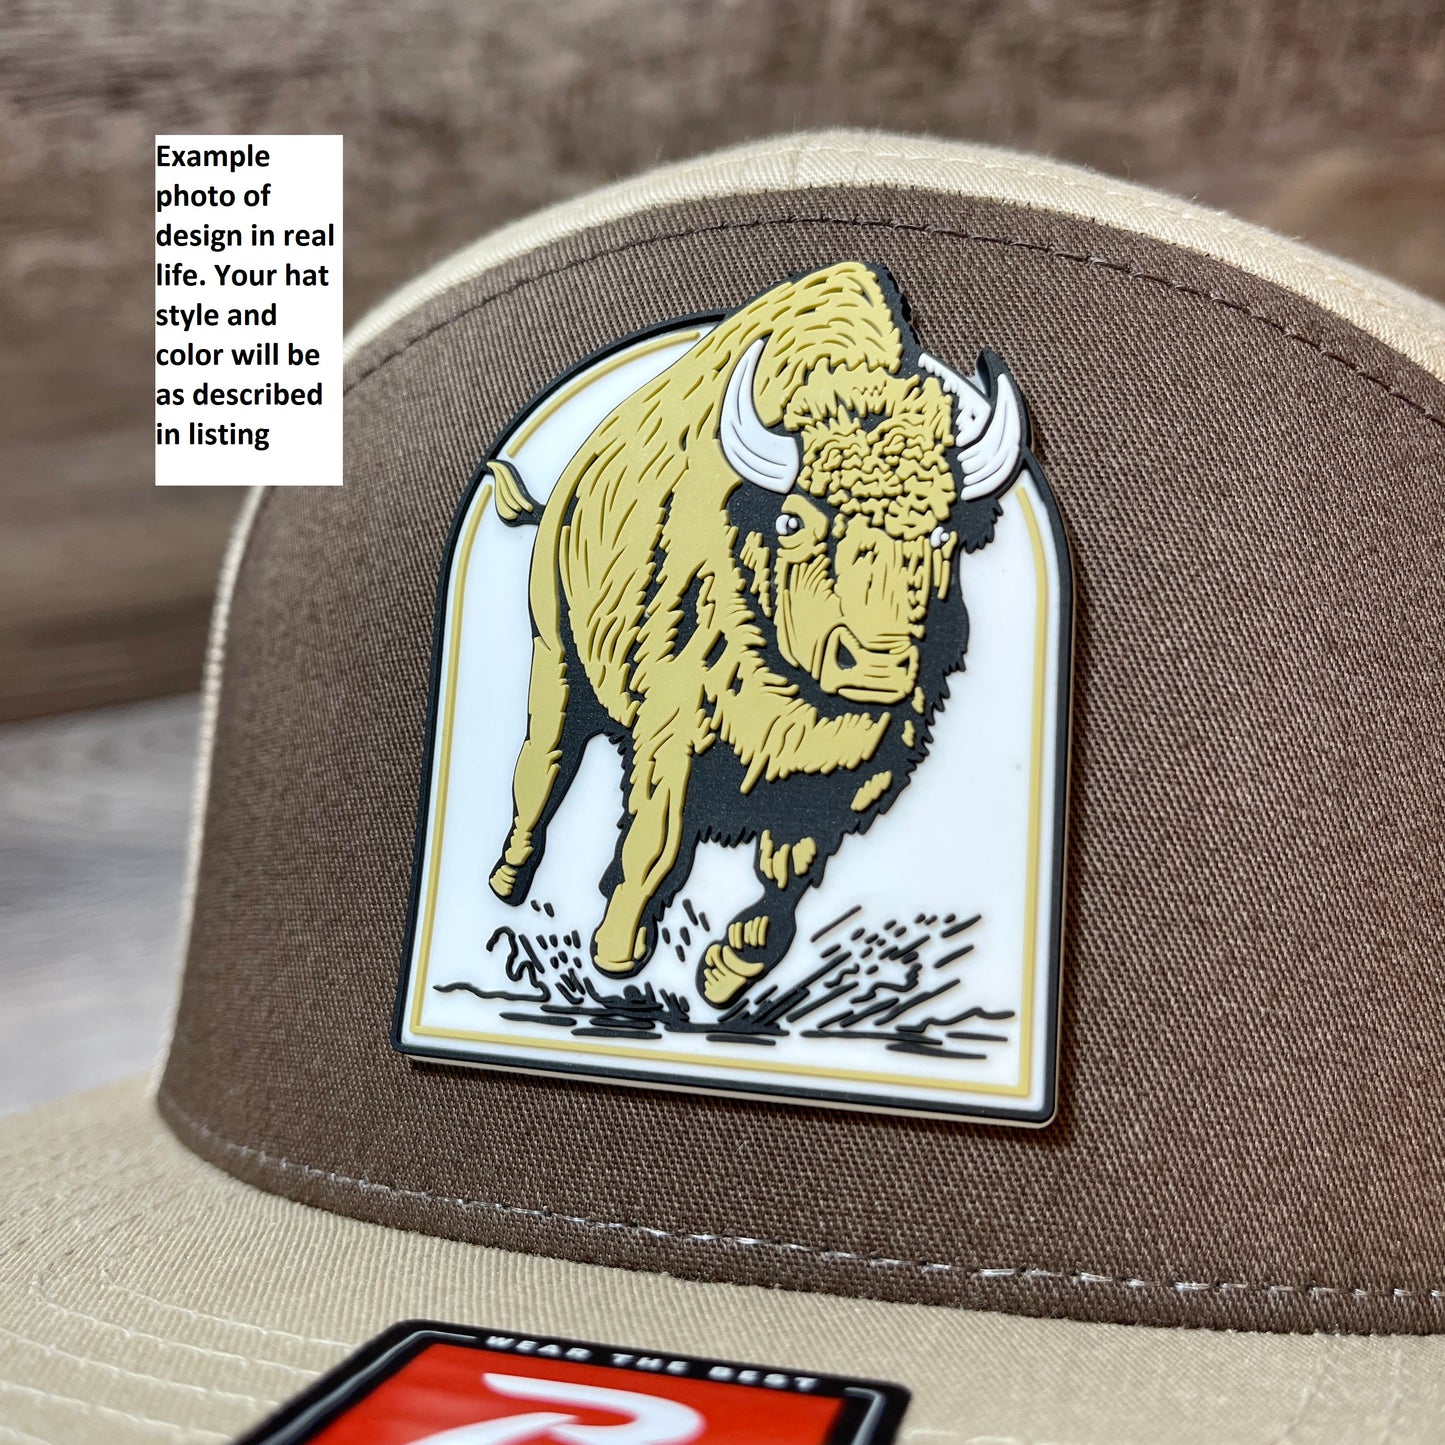 Colorado Wild Buffaloes Mascot Series 3D Patch Snapback Trucker Hat- Black/ White - Ten Gallon Hat Co.